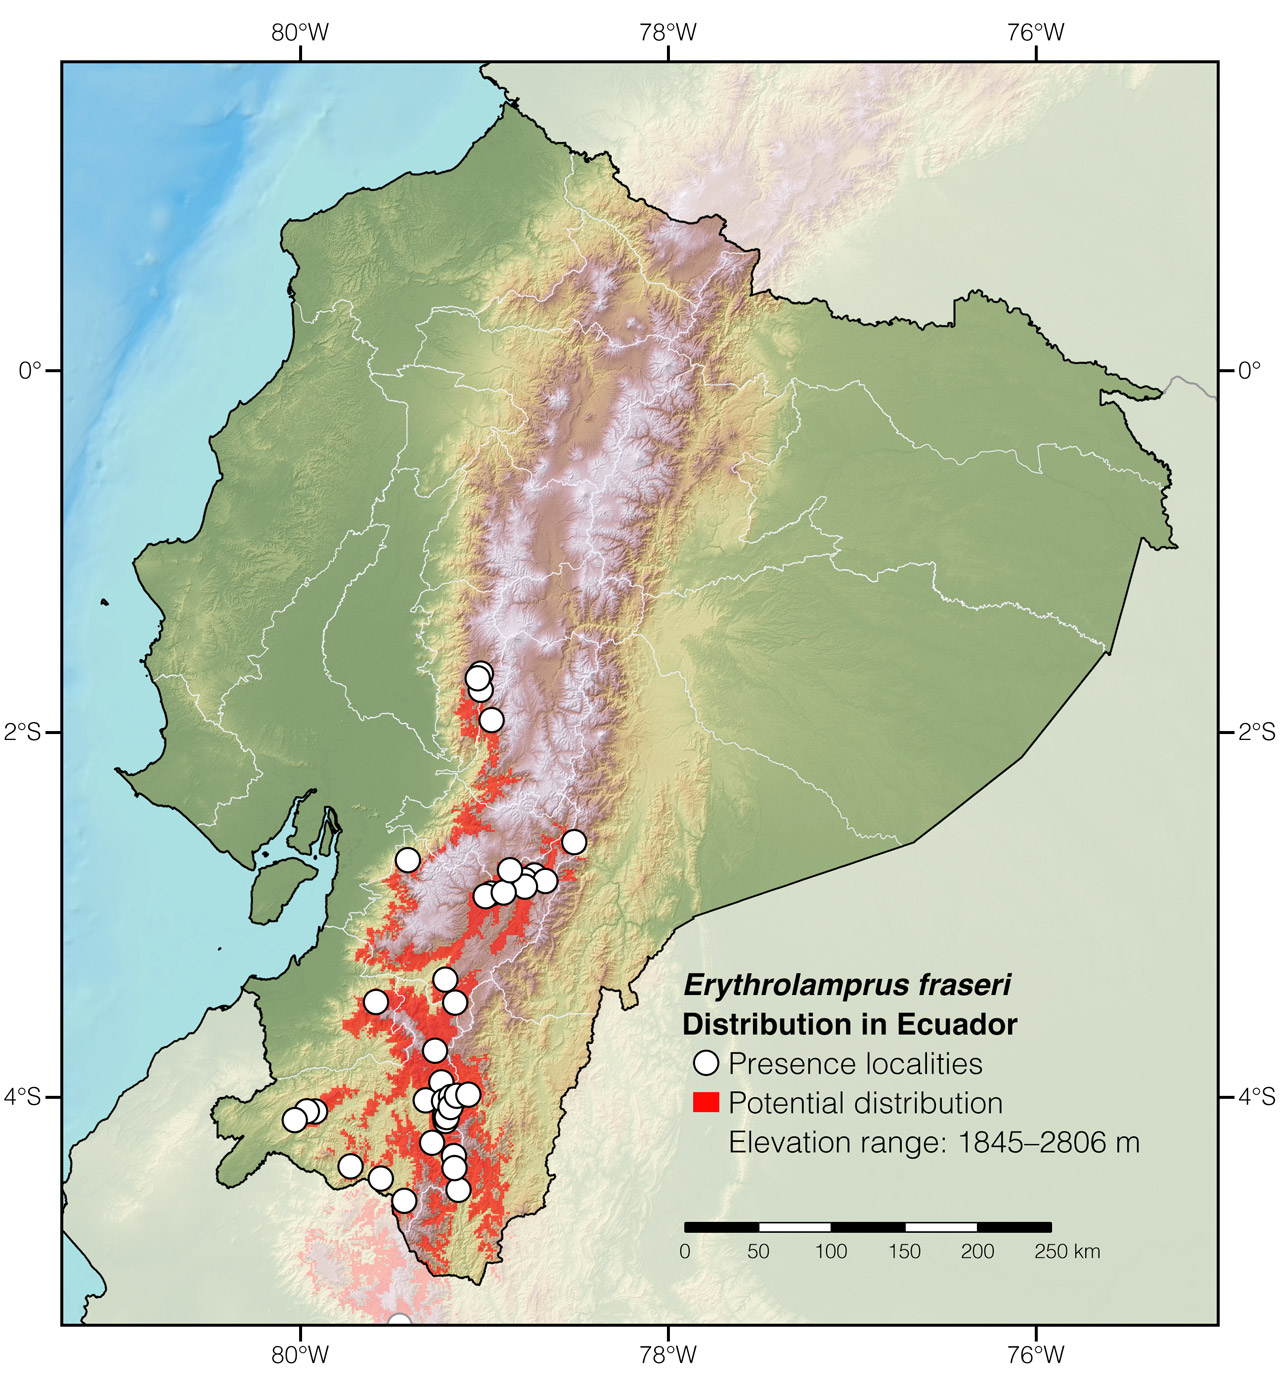 Distribution of Erythrolamprus fraseri in Ecuador